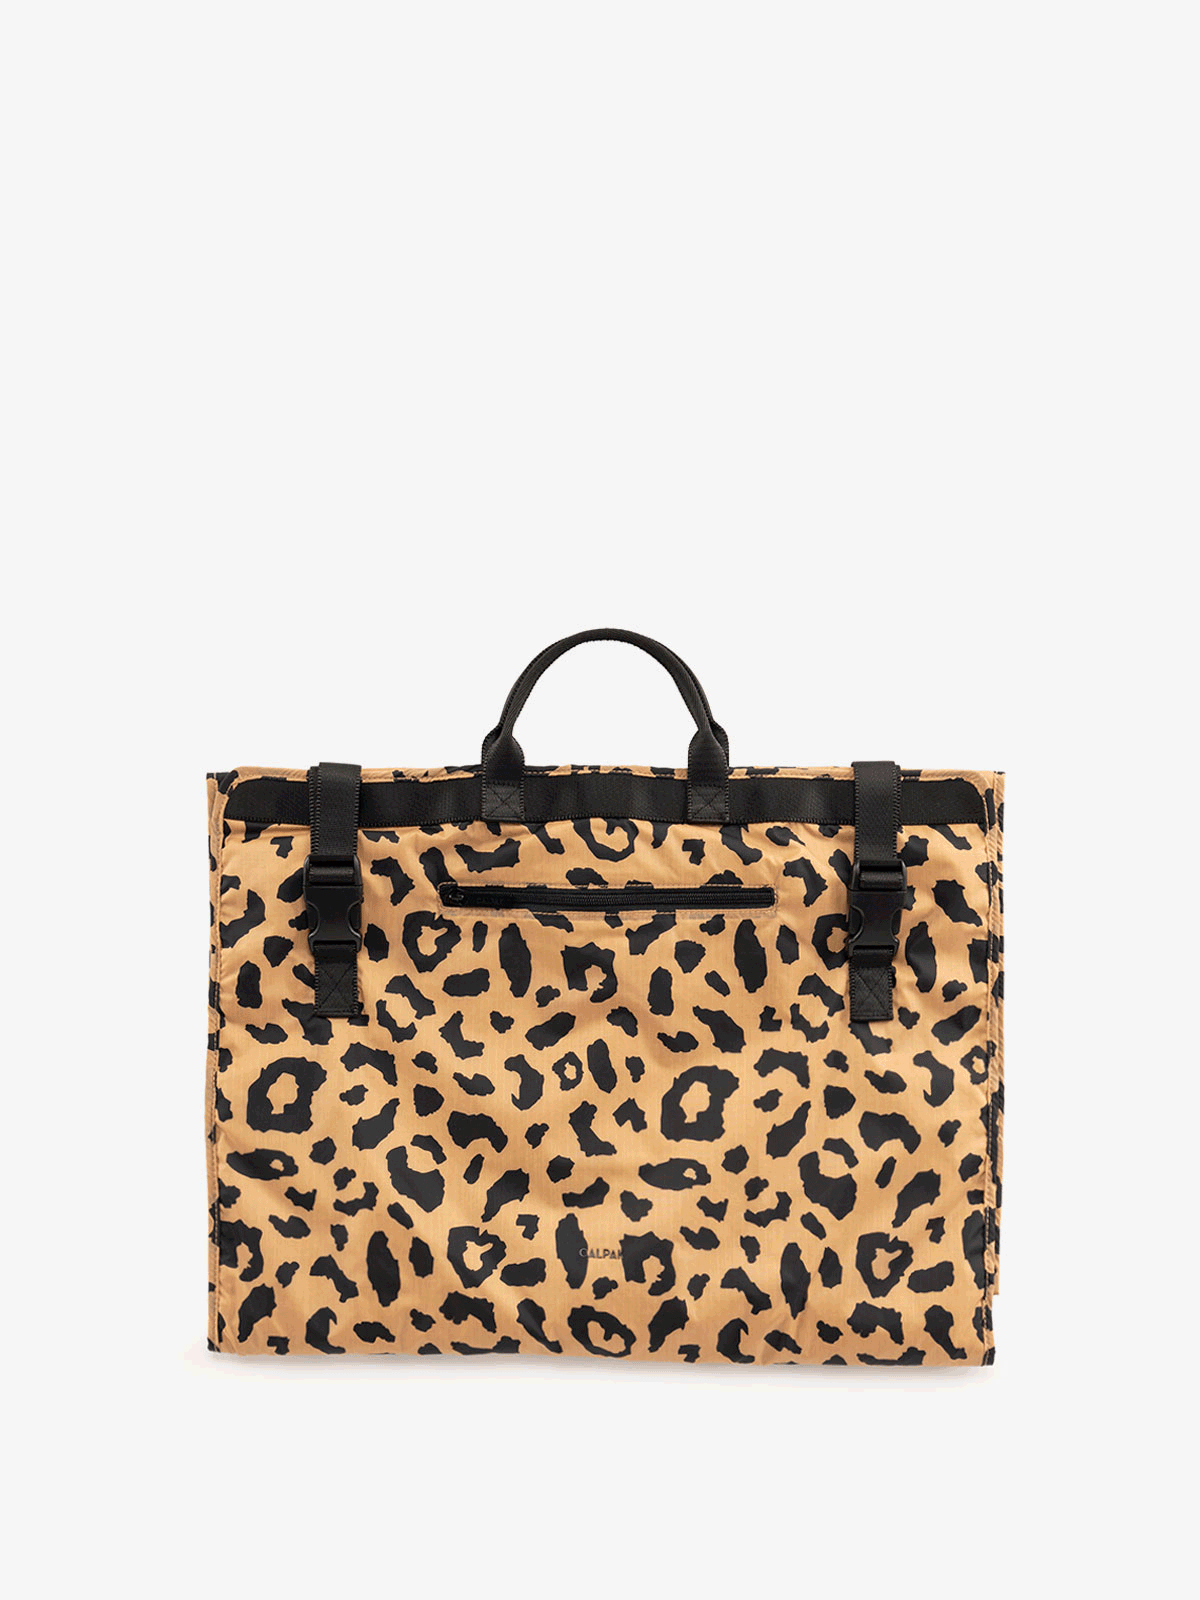 CALPAK Small Garment Bag with pockets in Cheetah